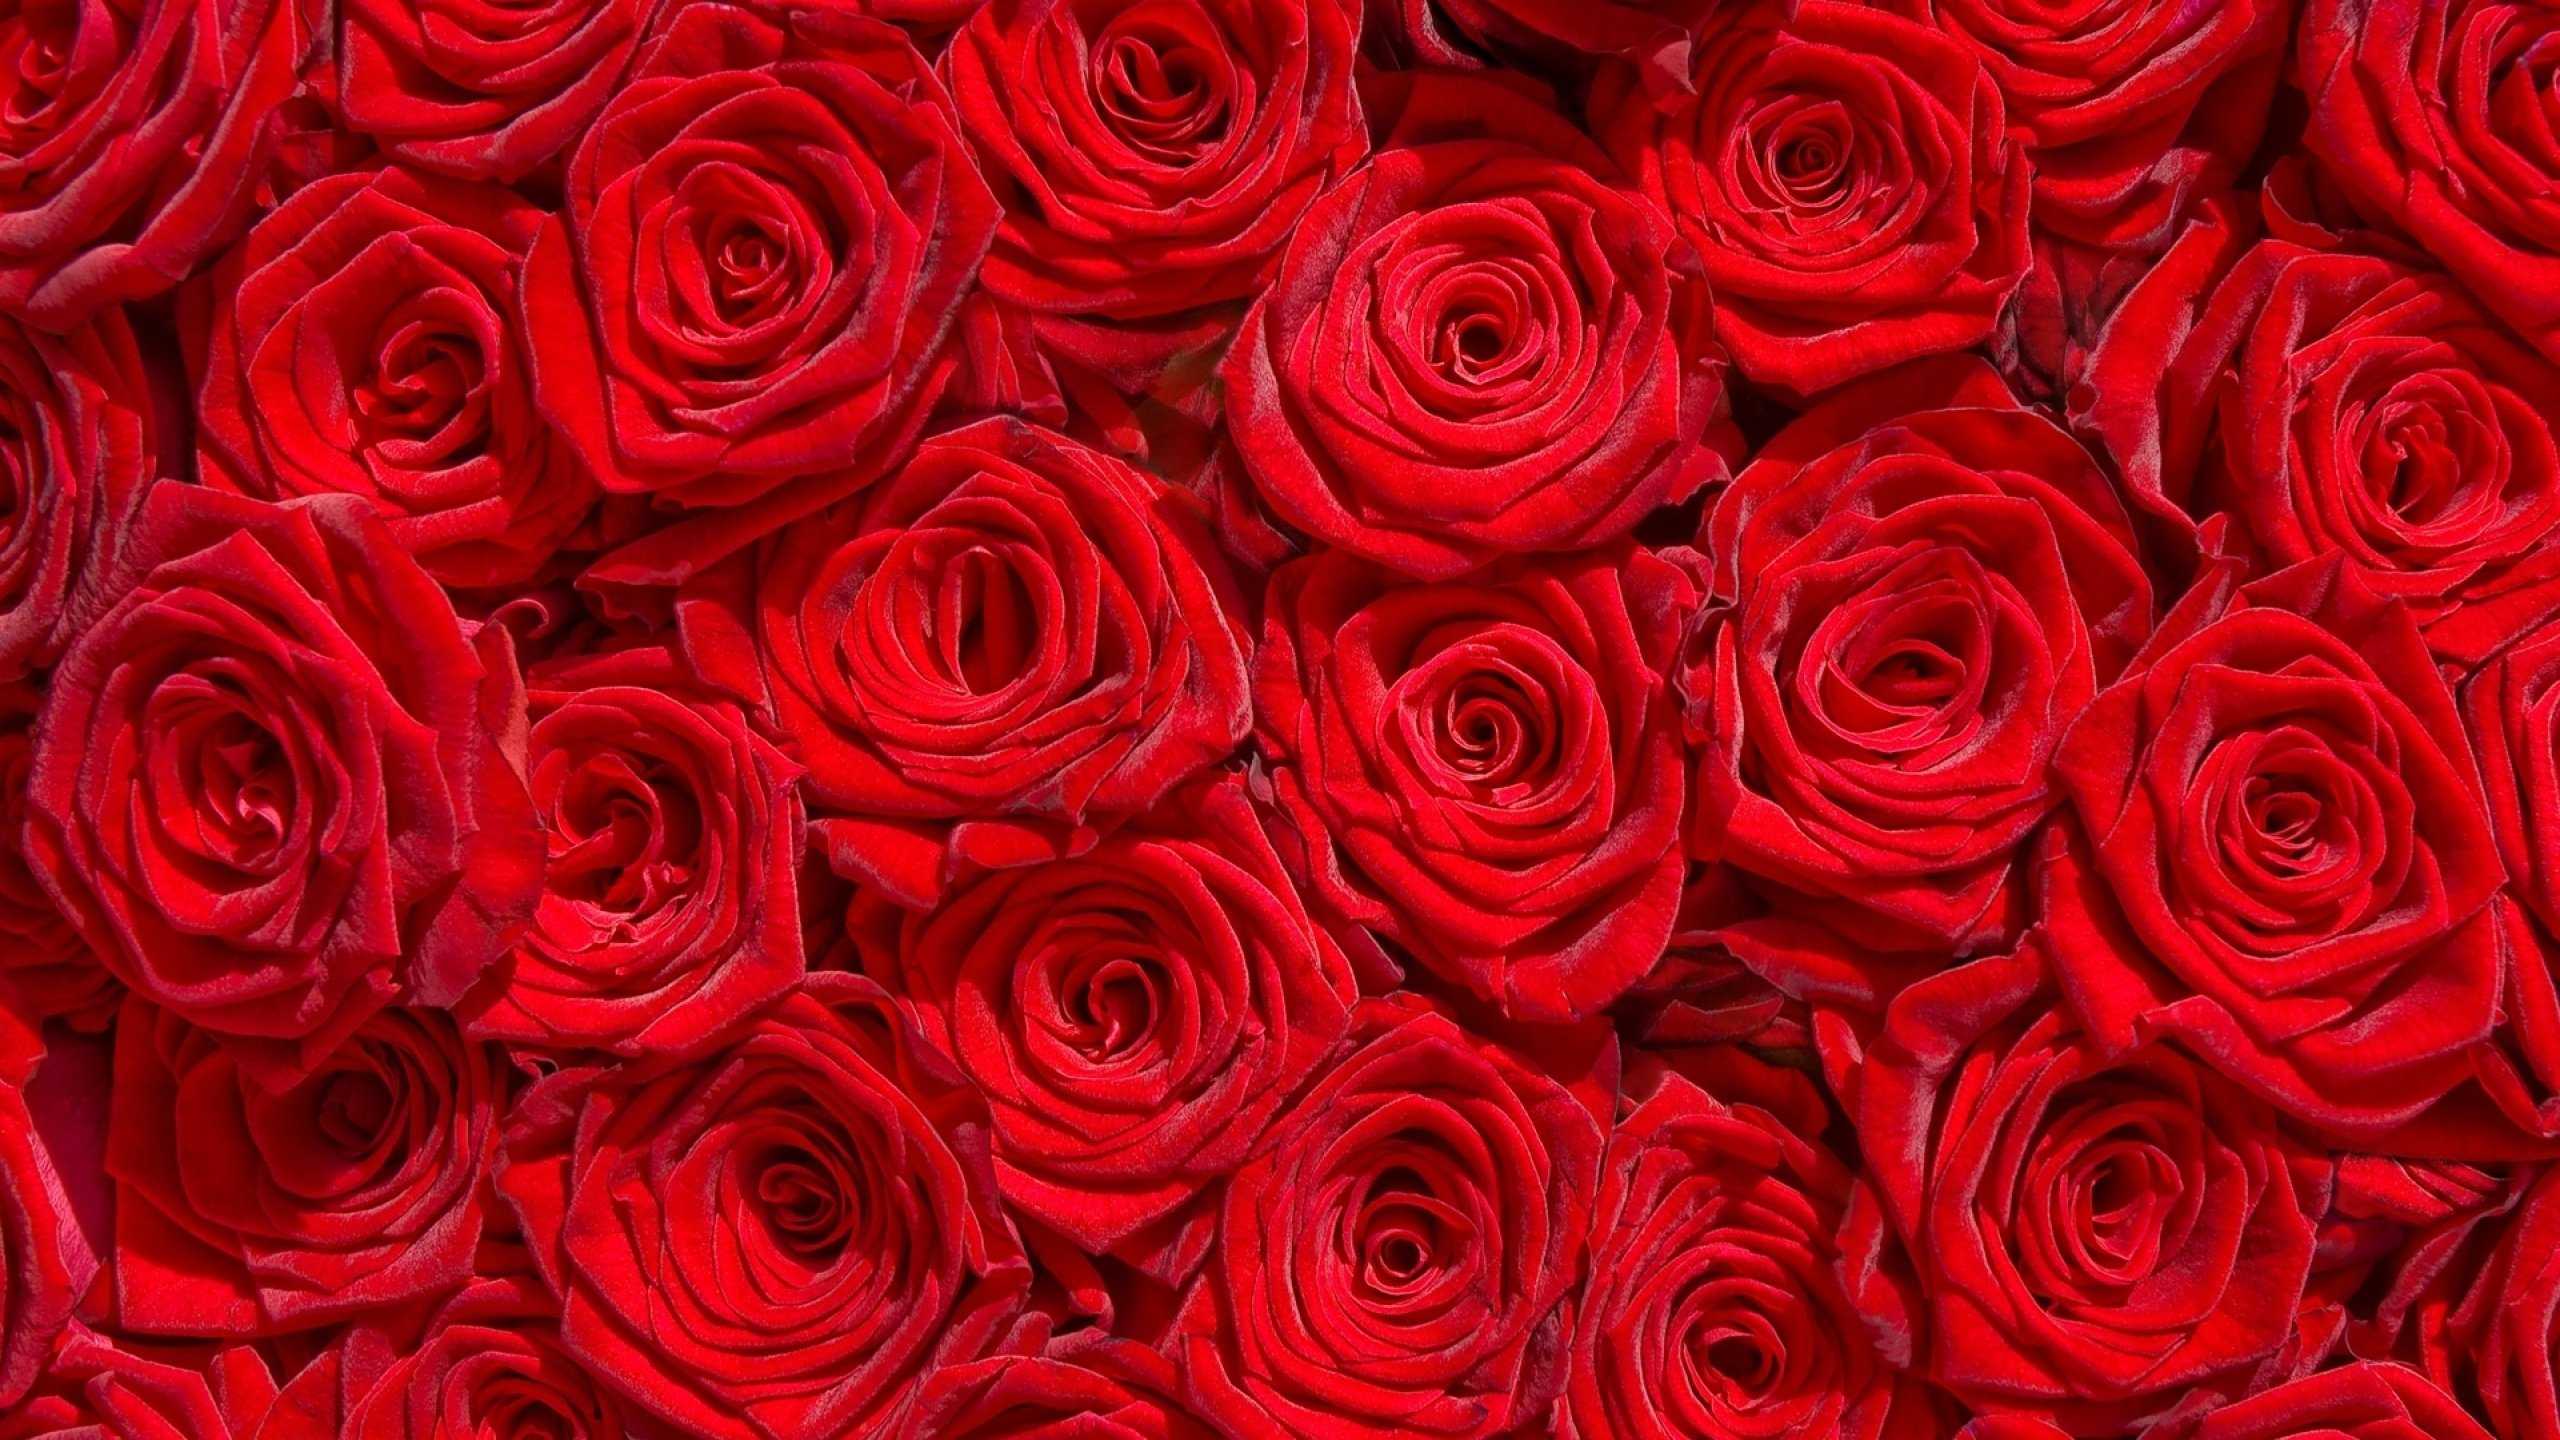 Rose Flower Garden Images Hd : Natural Rose Flower Garden Free Stock